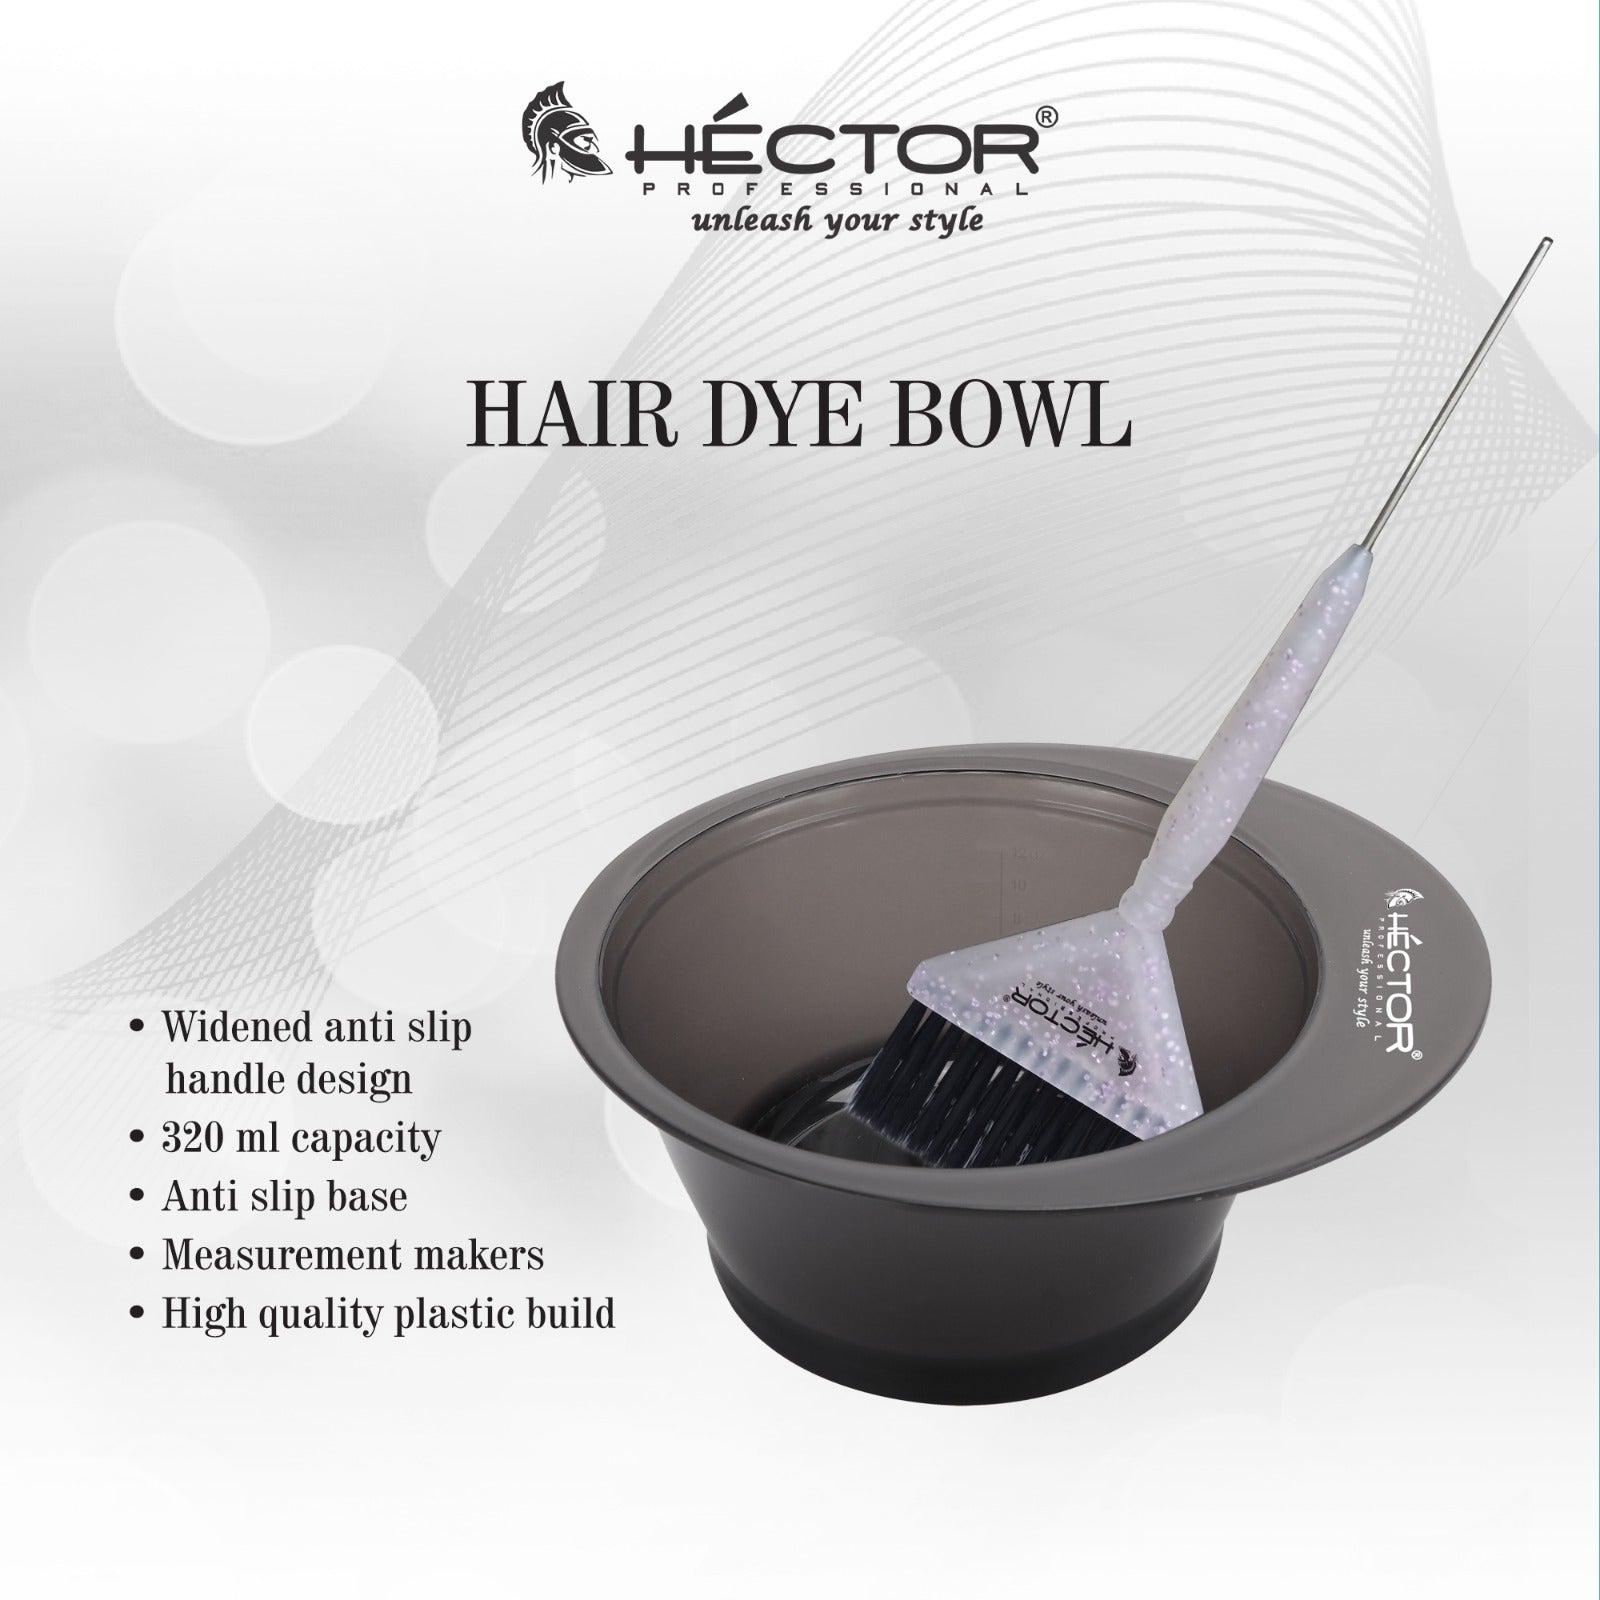 Hector Professional Hair Dye Brush and Bowl Set | Salon Hair Colour Mixing Dyeing Kit | Hair Dye Coloring Tools | Hair Tinting Set